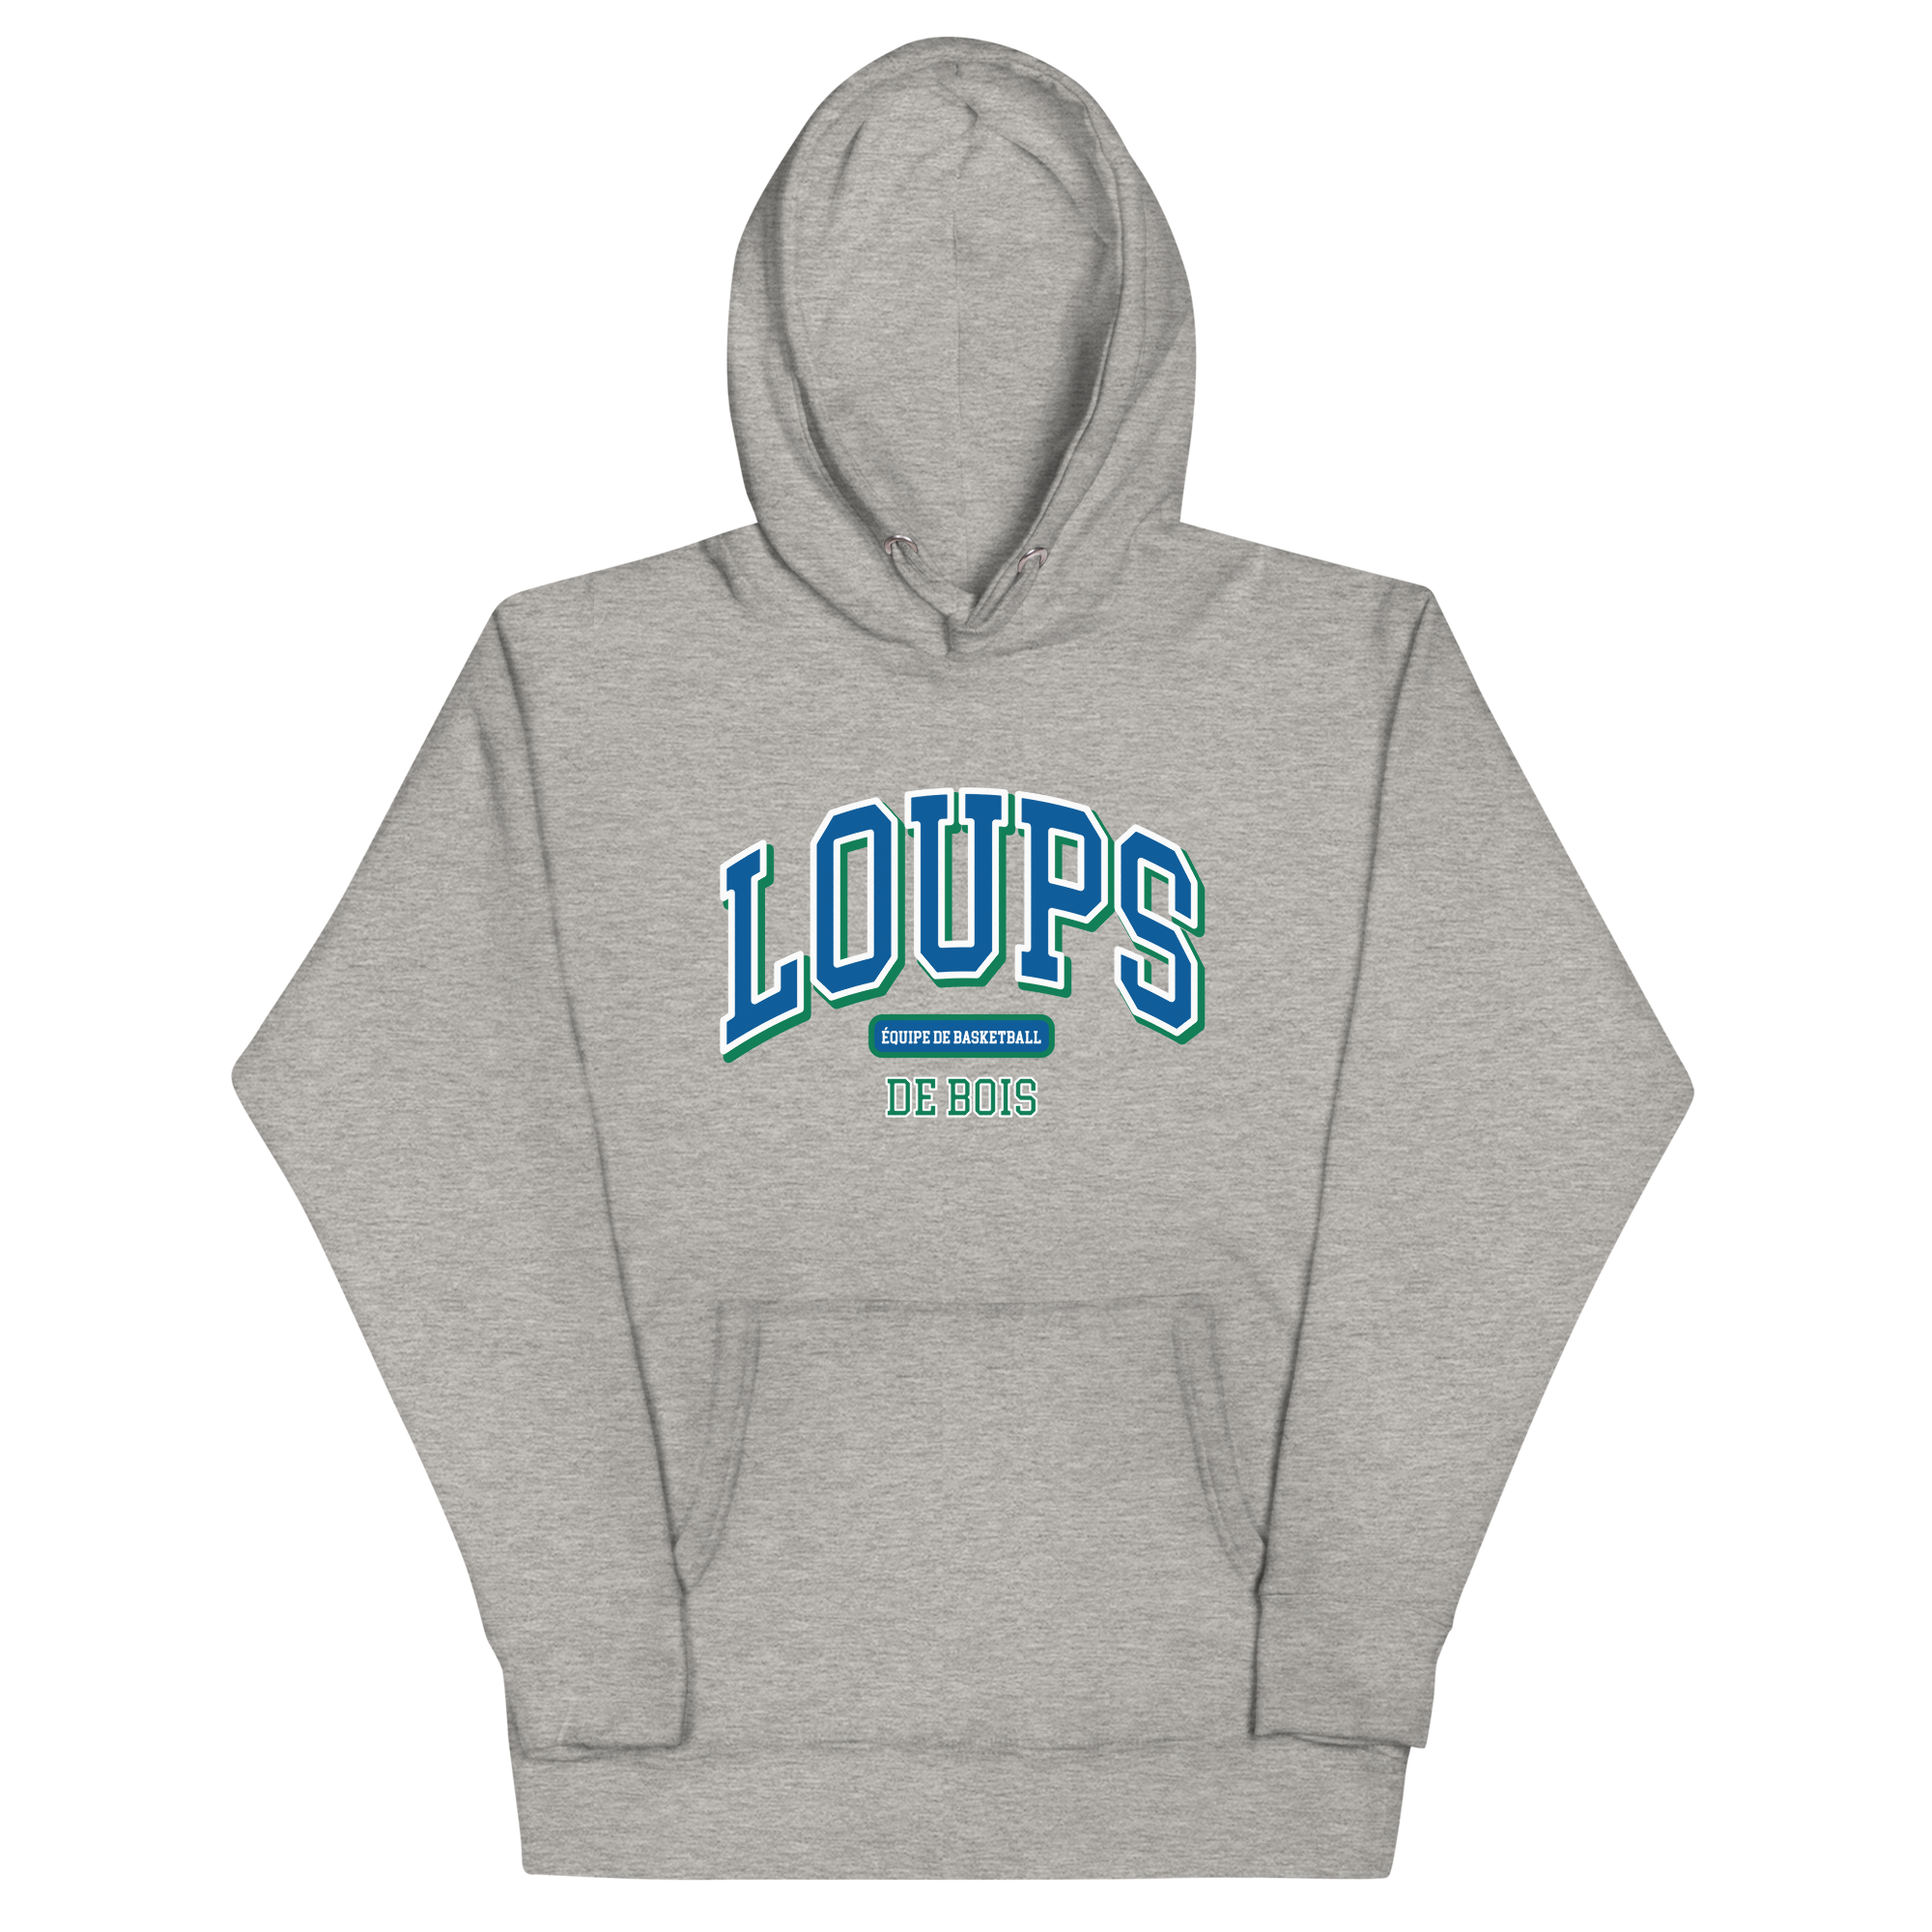 university of louisville hoodies